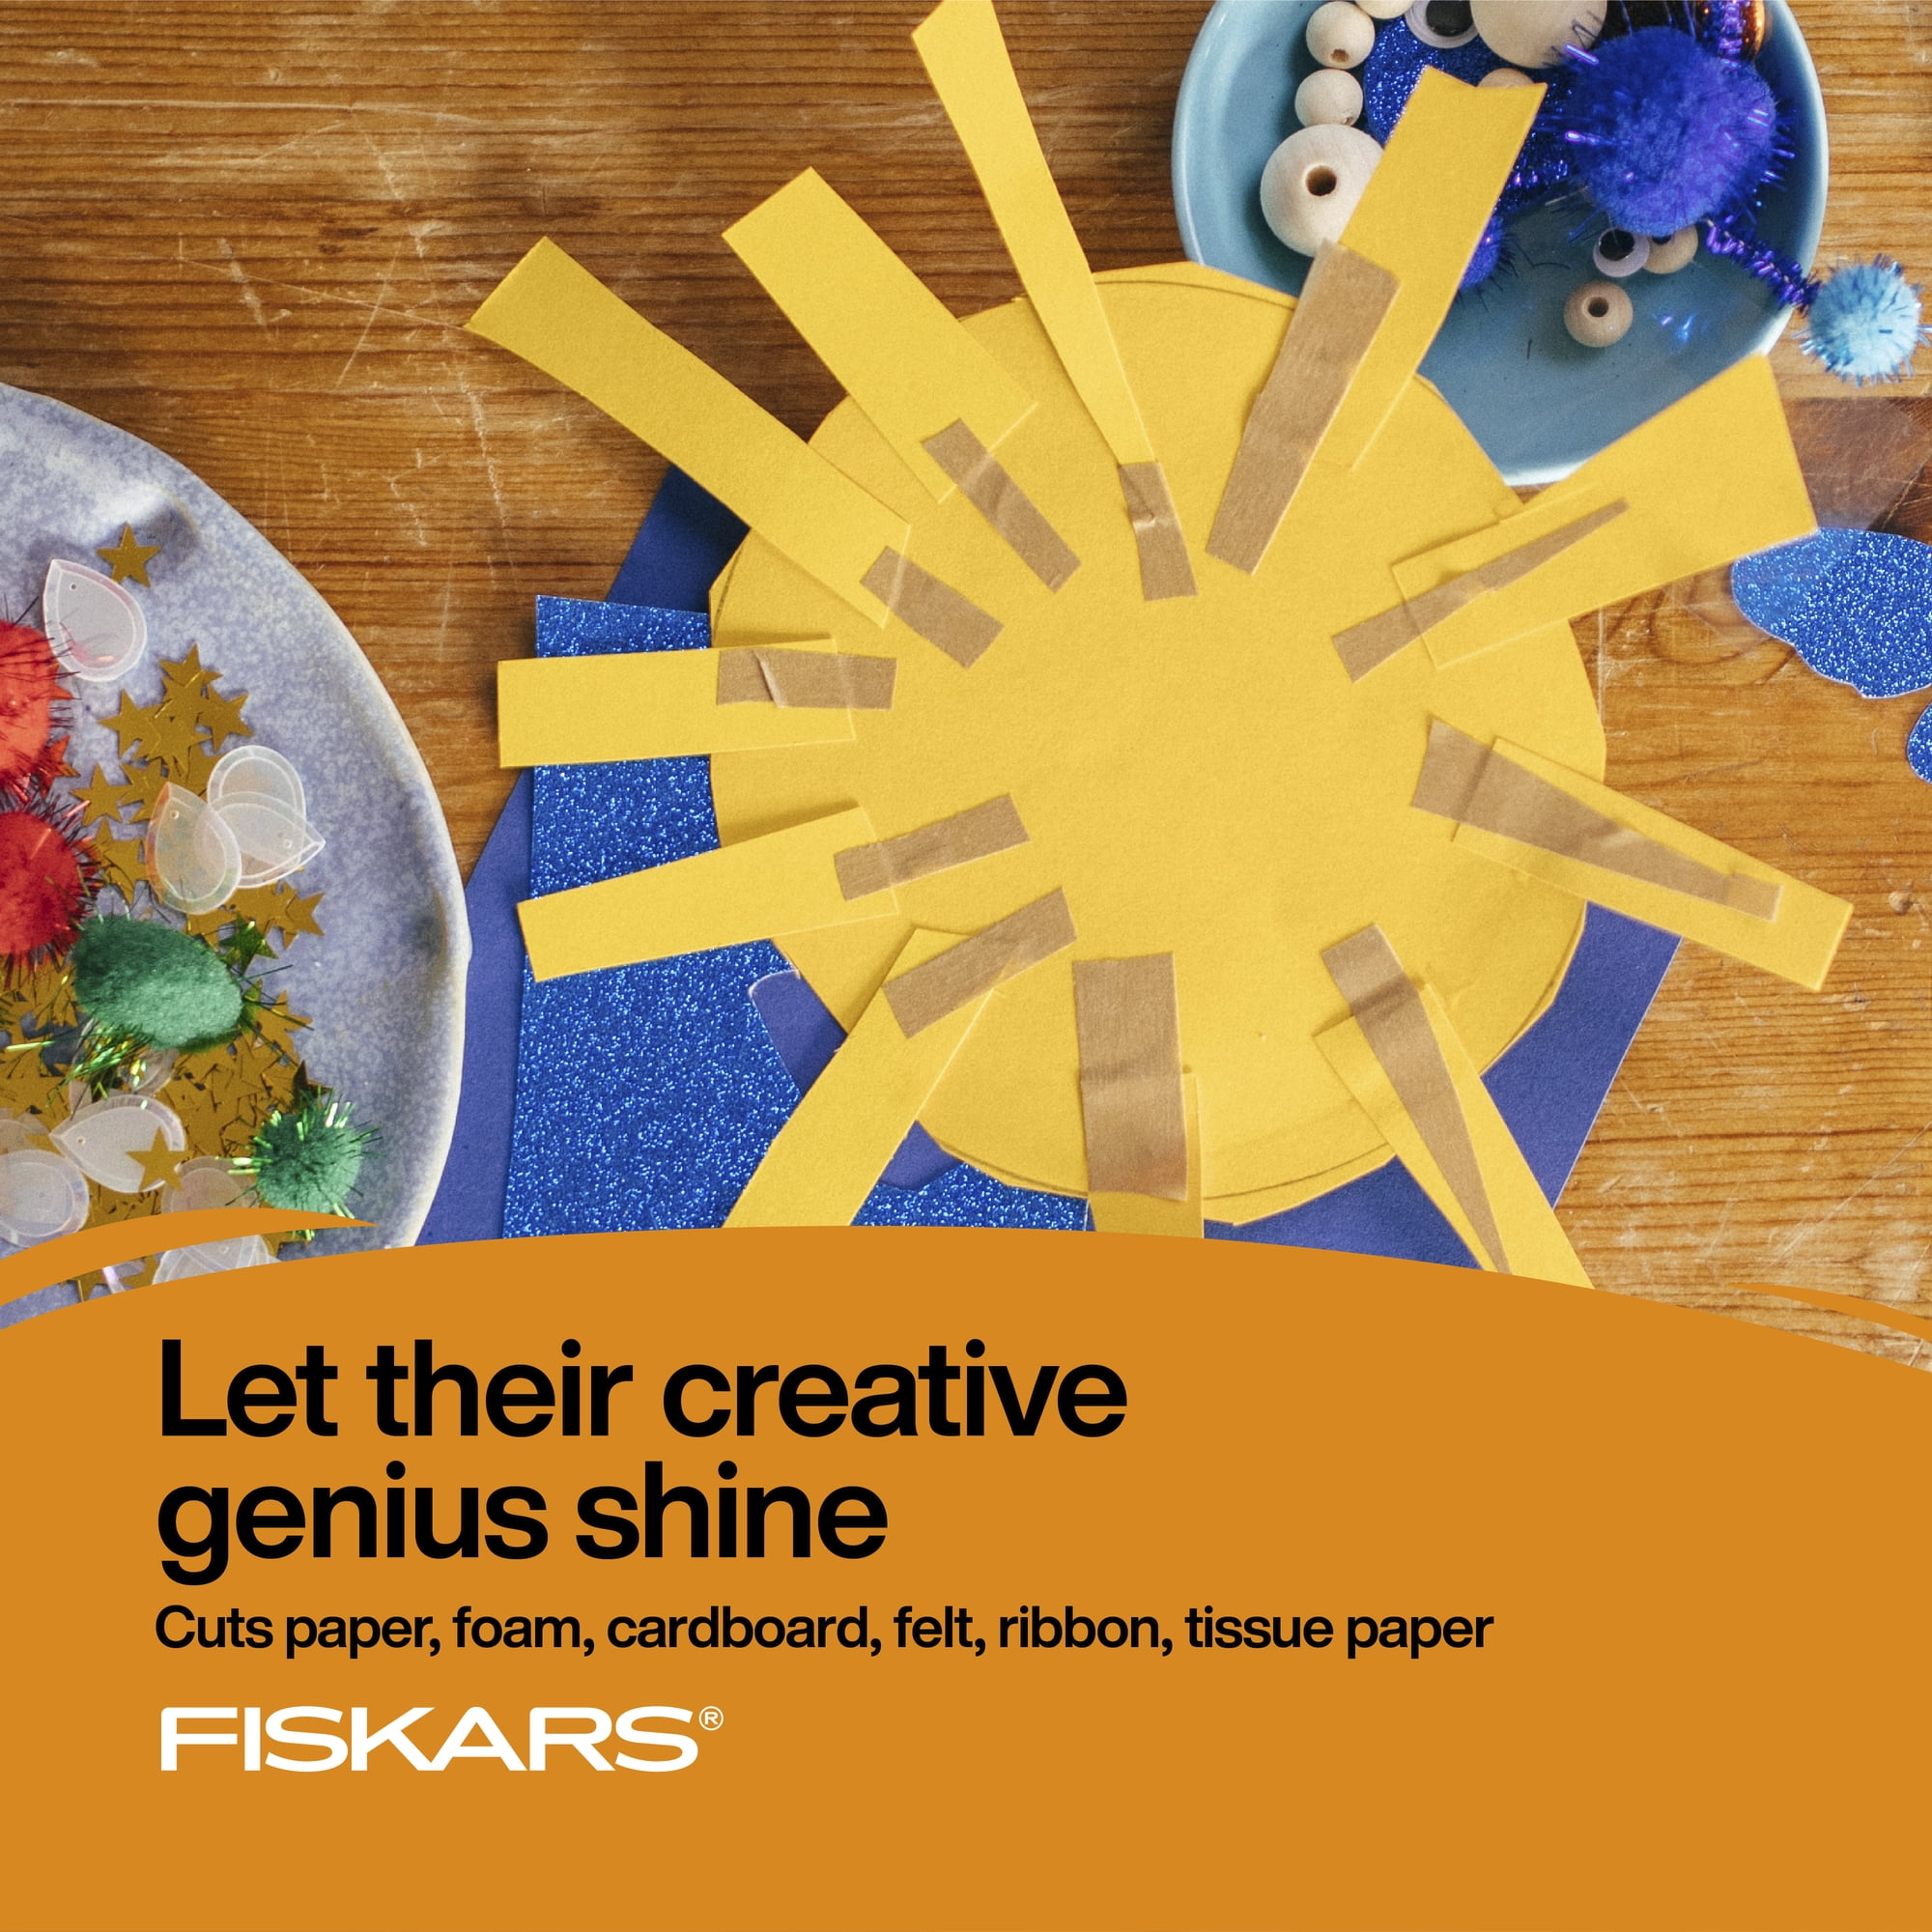 Fiskars® Comfort Grip Big Kids Scissors - Blue, 1 ct - City Market